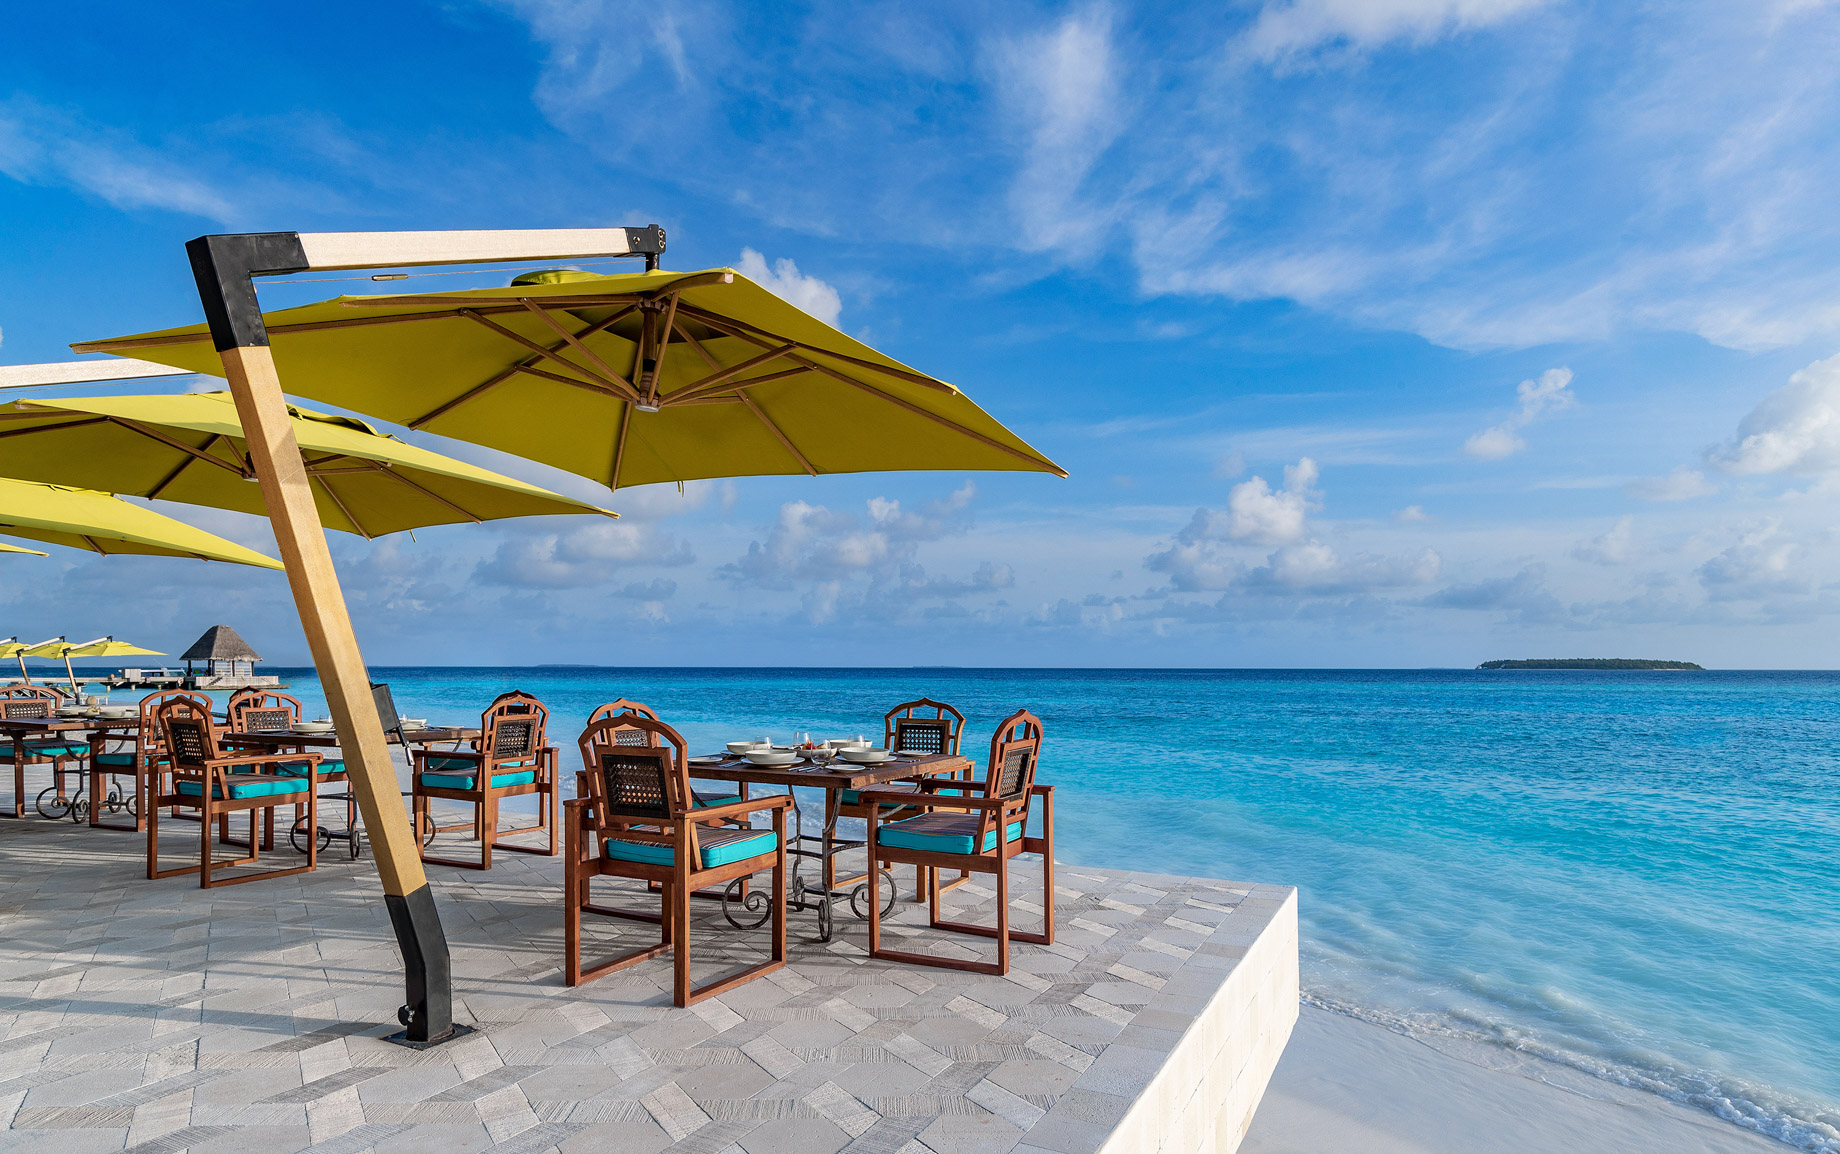 Anantara Kihavah Maldives Villas Resort – Baa Atoll, Maldives – Plates Restaurant Ocean View